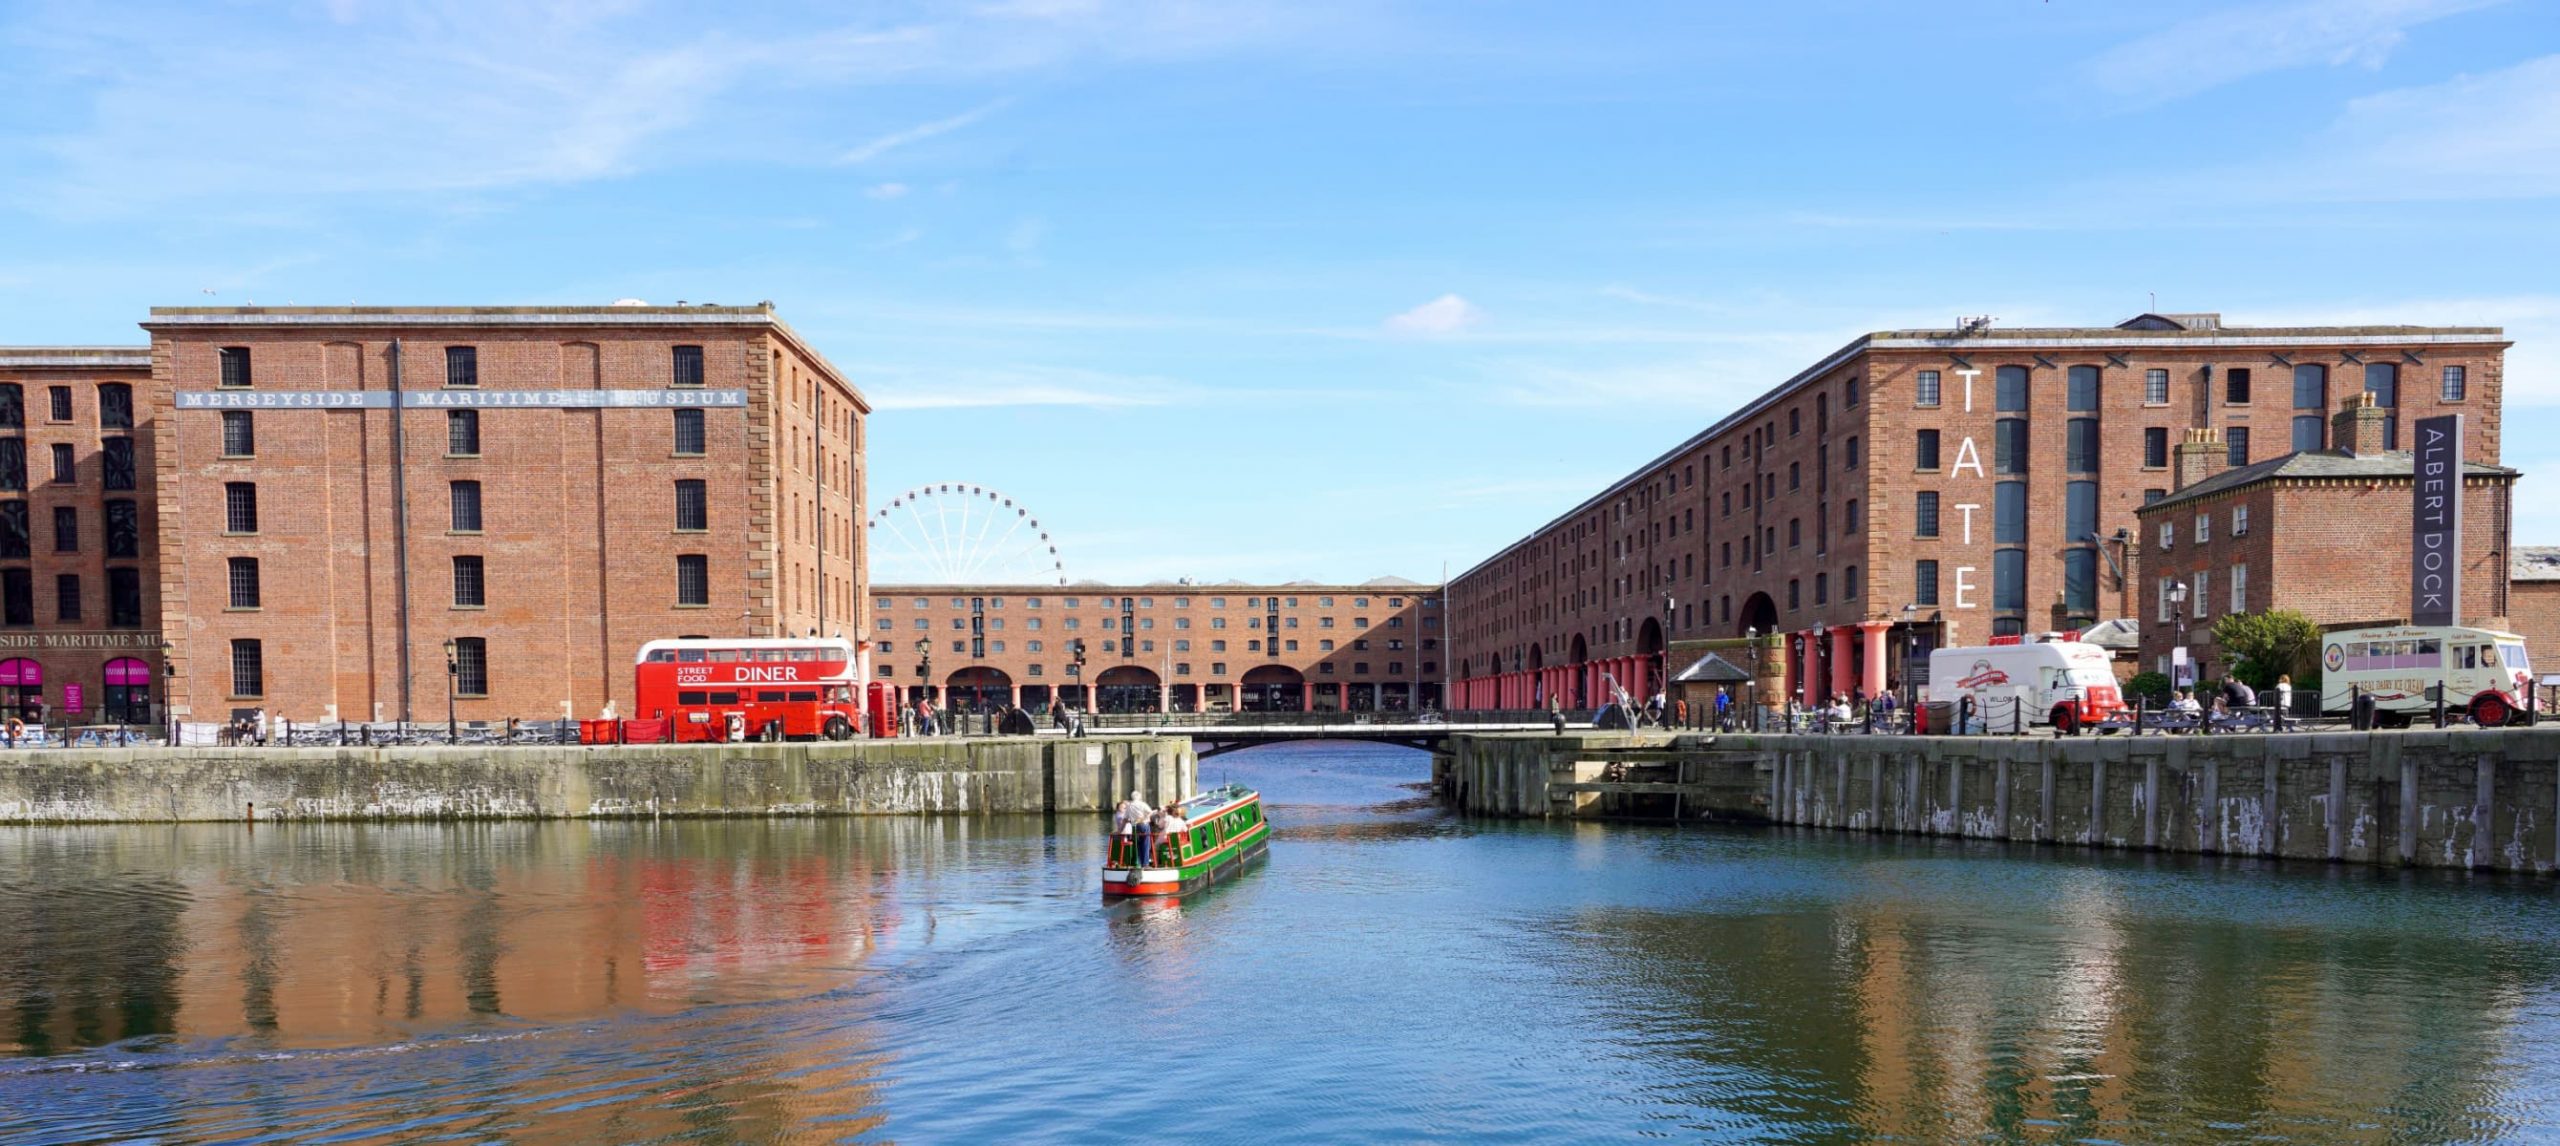 Museums in Liverpool on Albert Dock